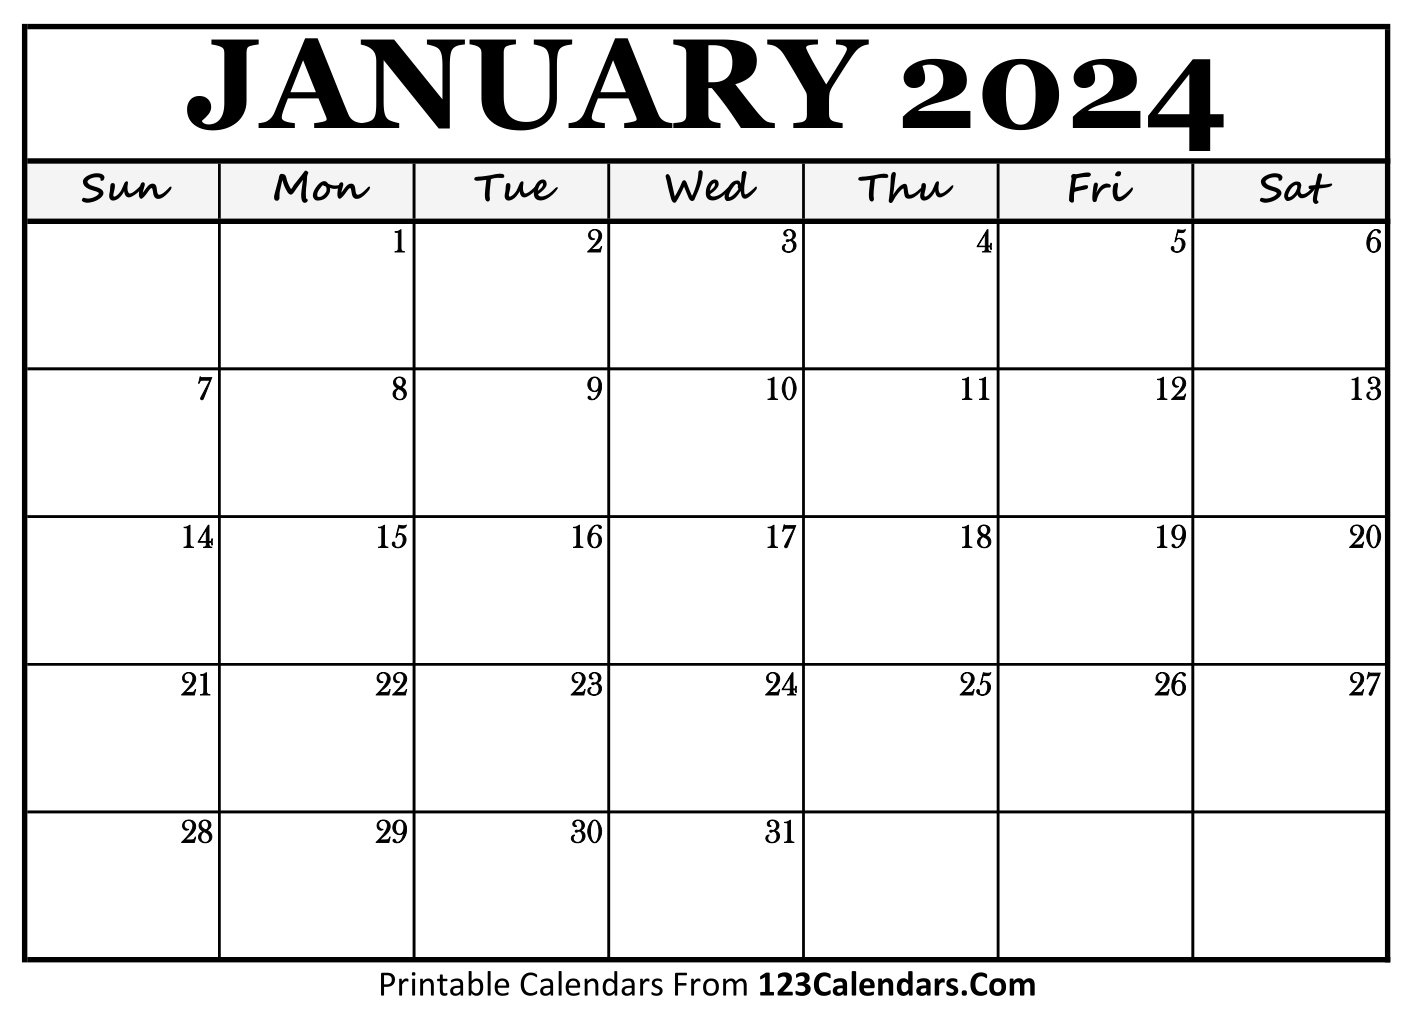 Printable January 2024 Calendar Templates - 123Calendars | Printable Calendar 2024 January Month